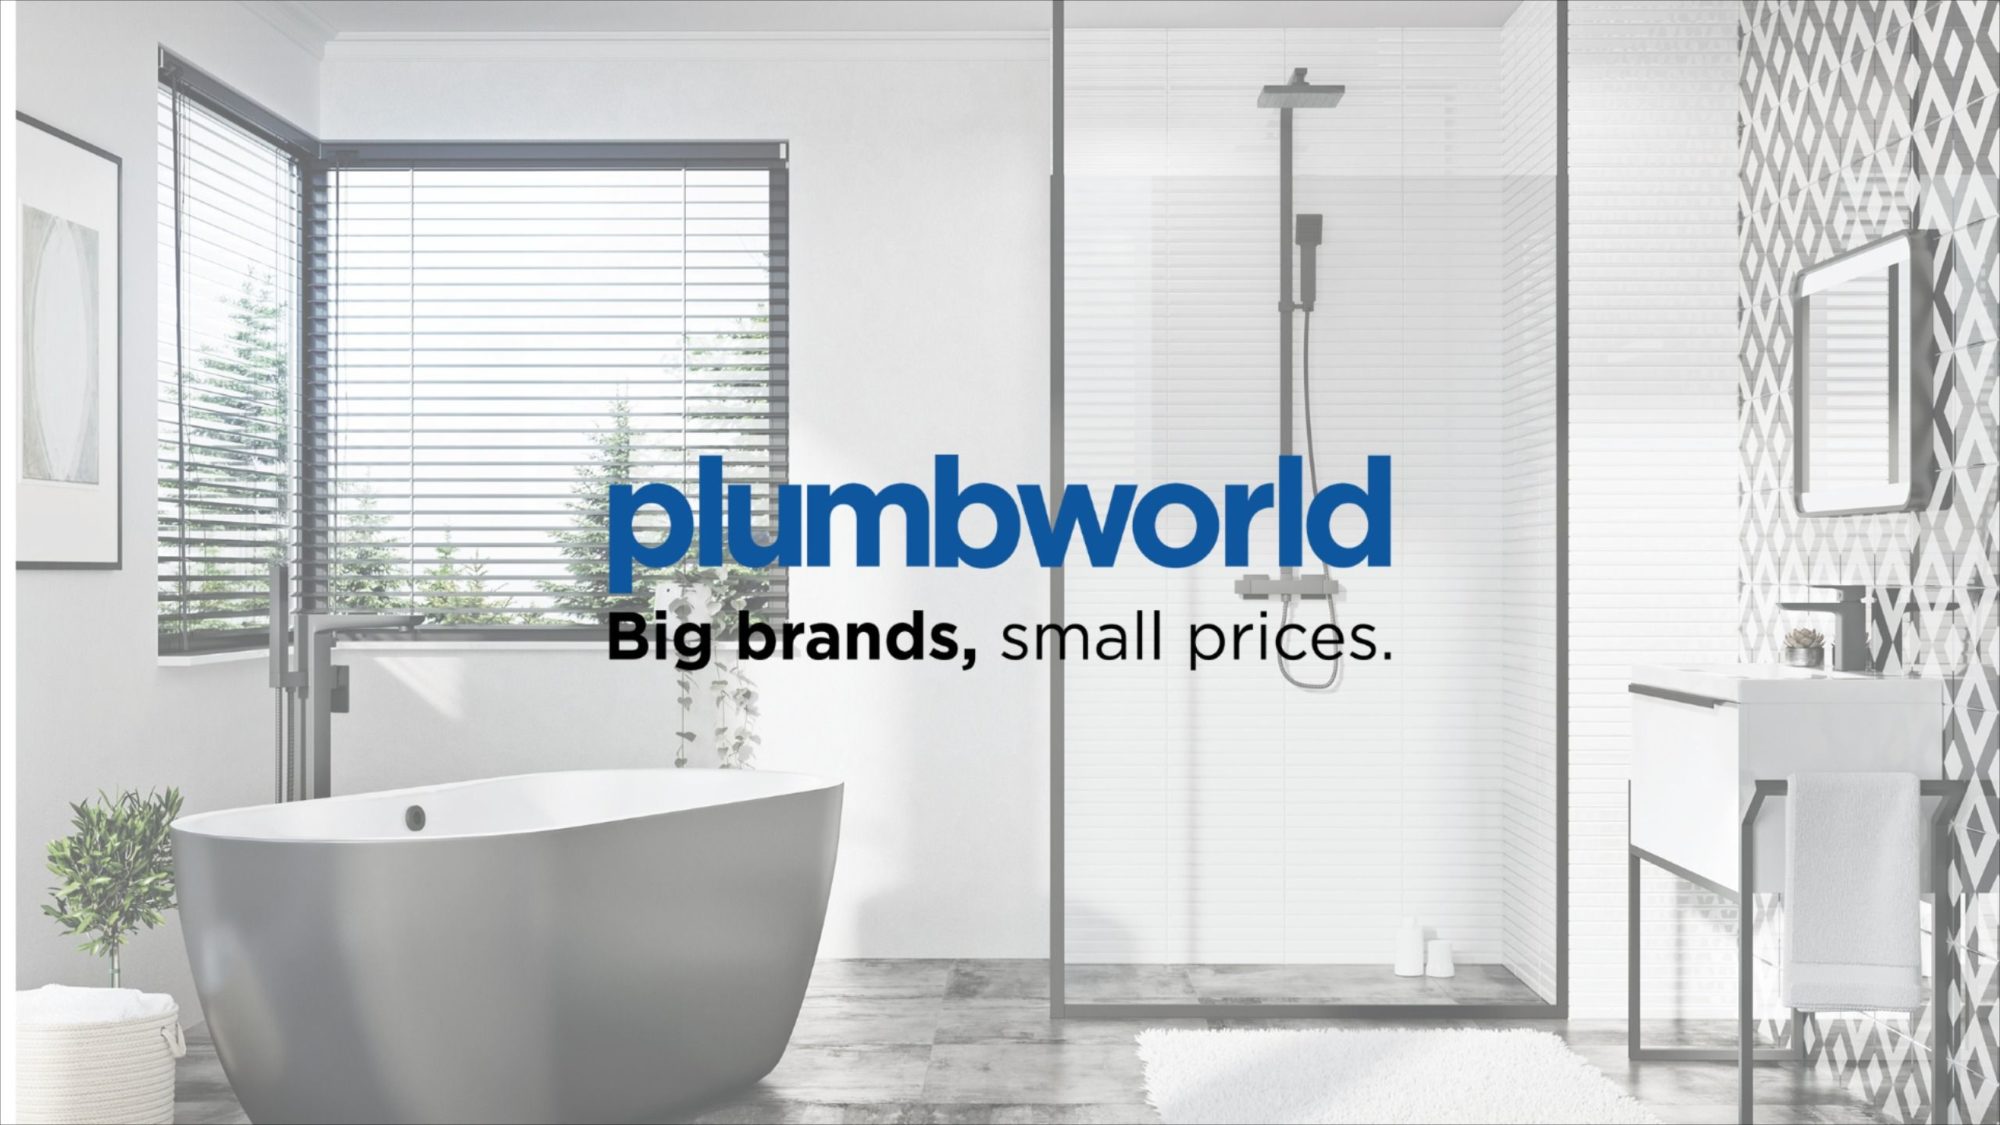 Plumbworld sold